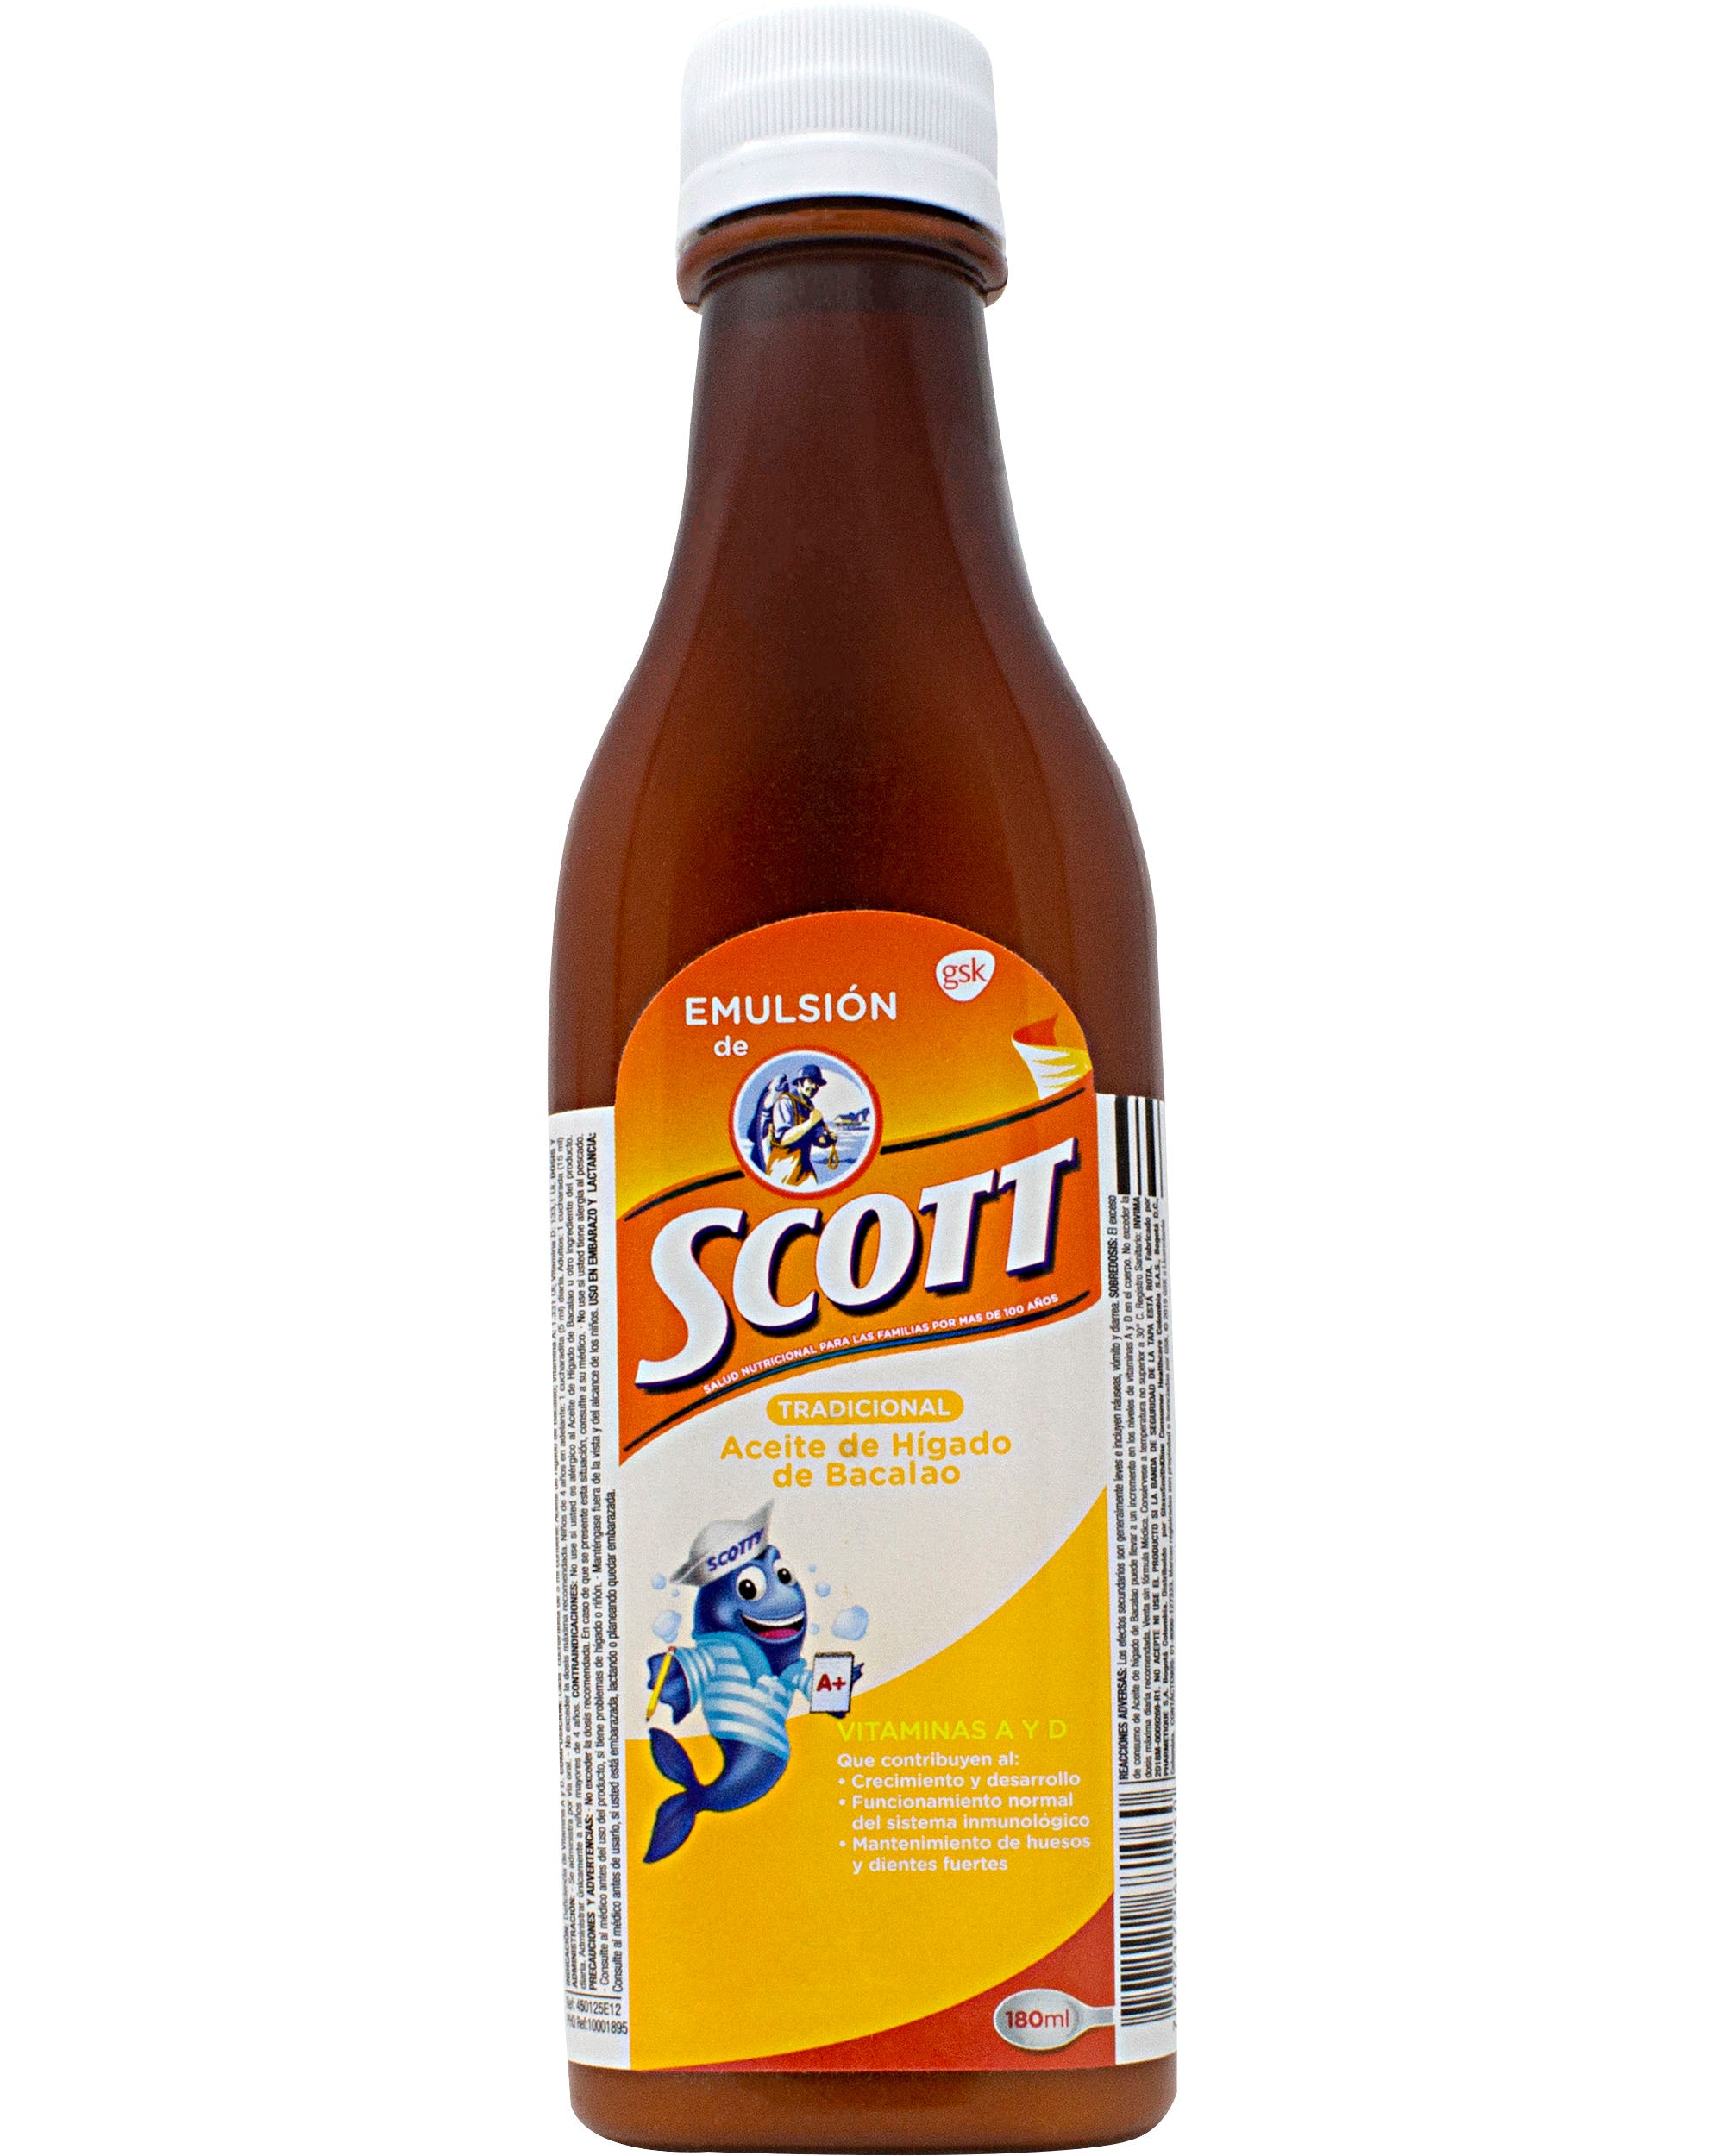 Emulsion de Scott, Original (Cod Liver Oil) - 6 fl oz / 180 ml